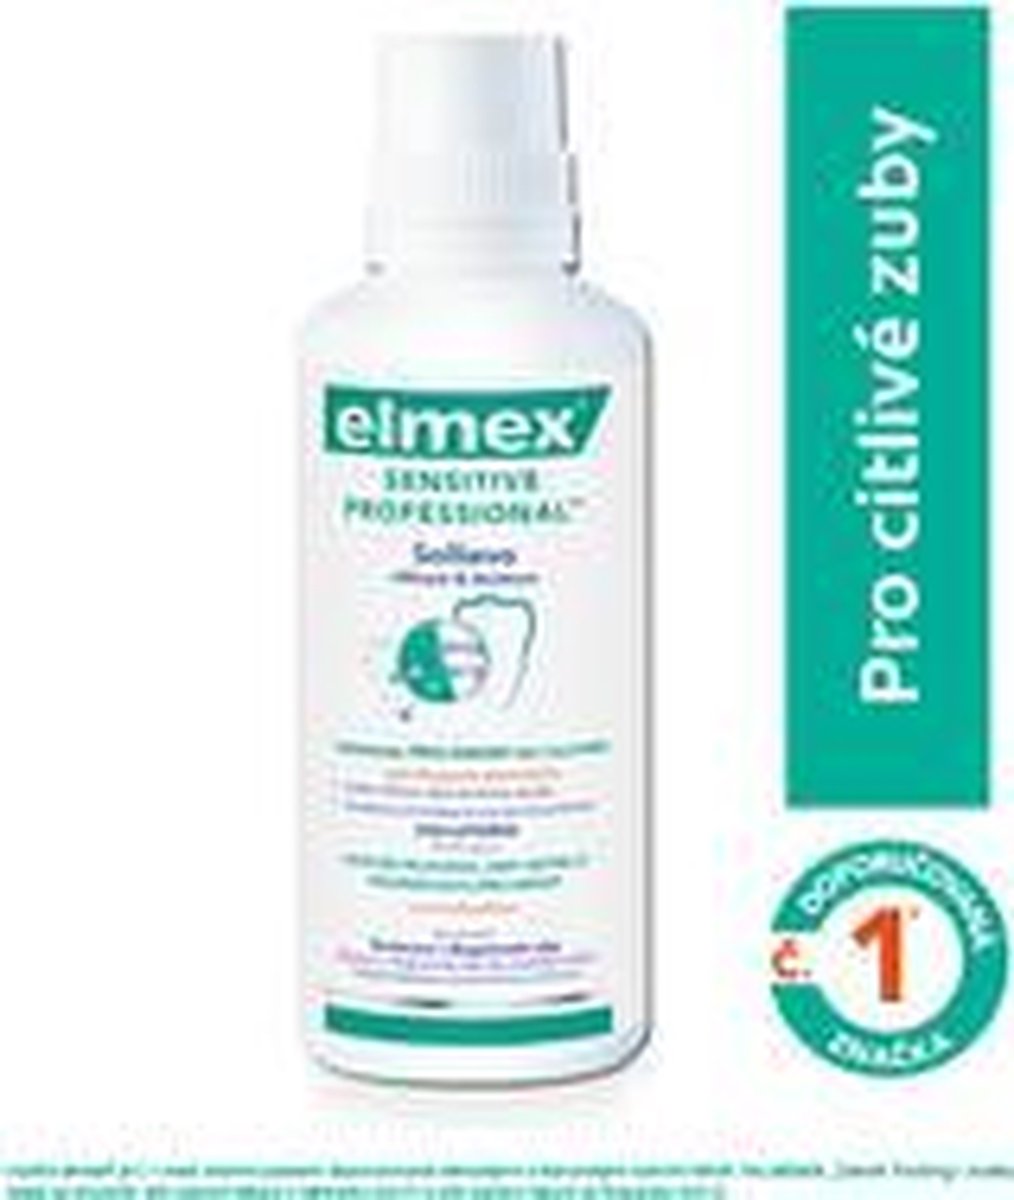 Elmex - Mouthwash for sensitive teeth Sensitiv e Professional 400 ml - 400ml